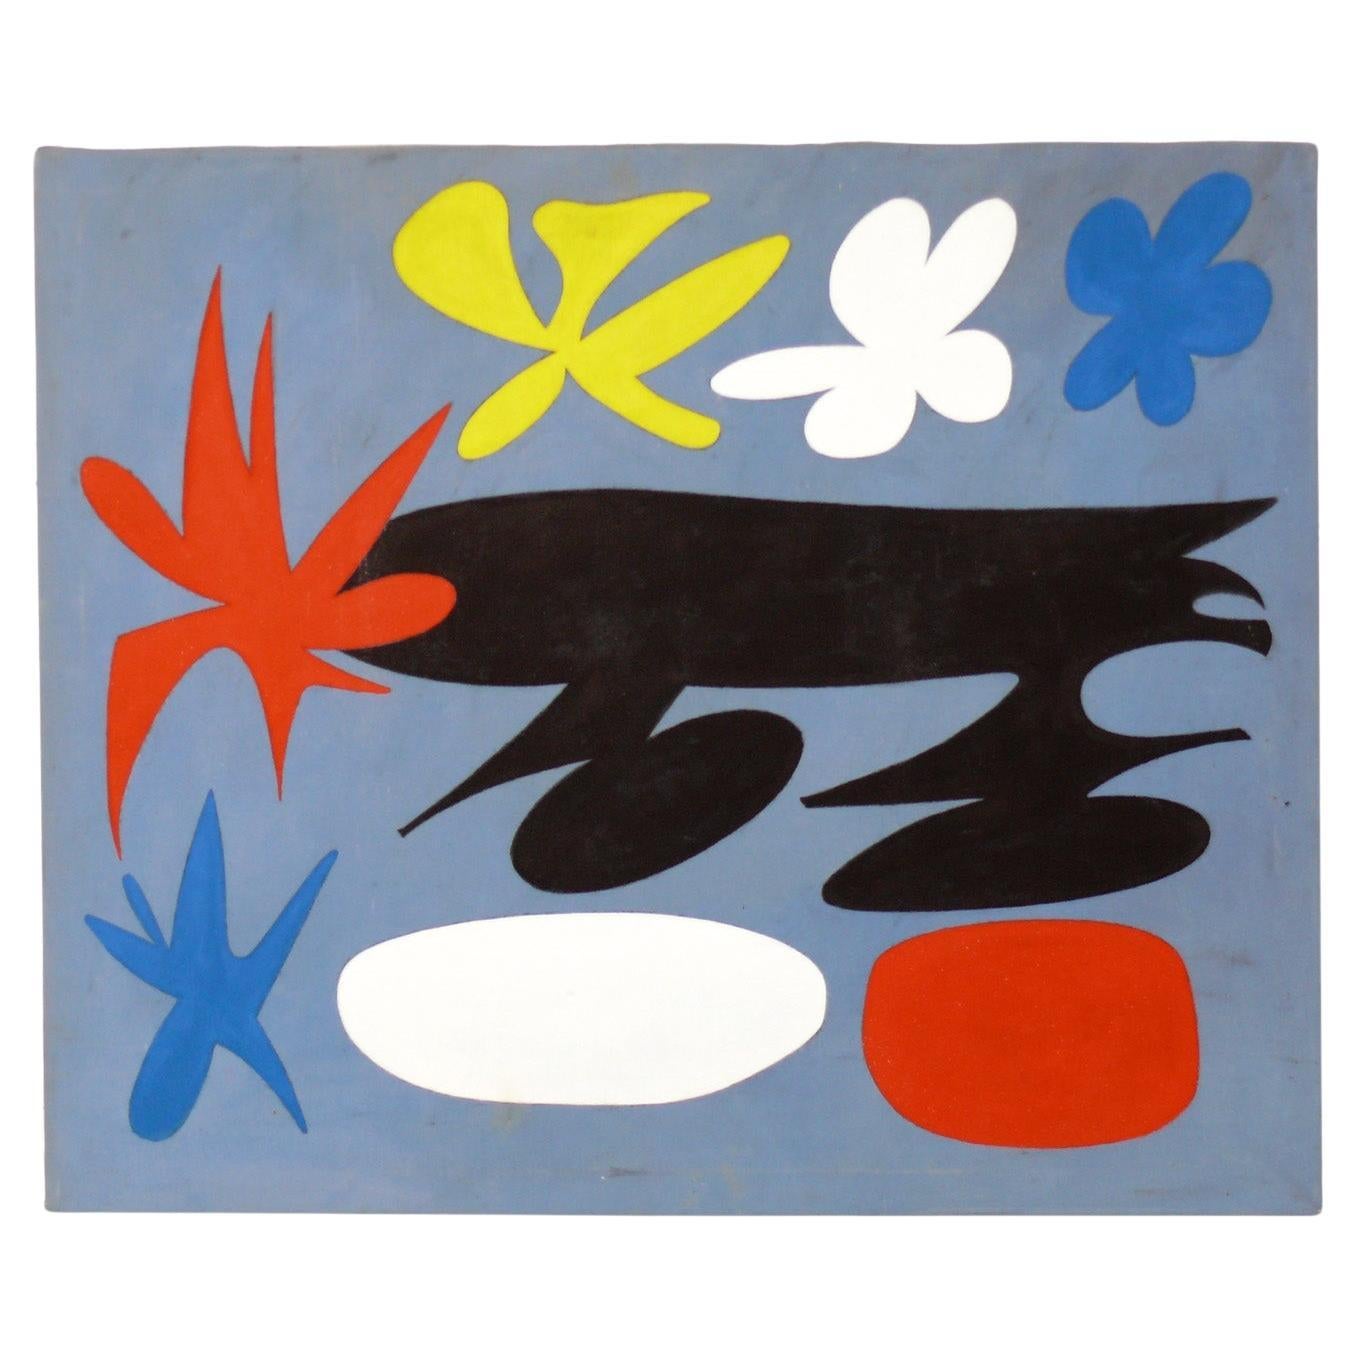 Abstraktes Gemälde im Joan Miro-Stil, ca. 1960er Jahre